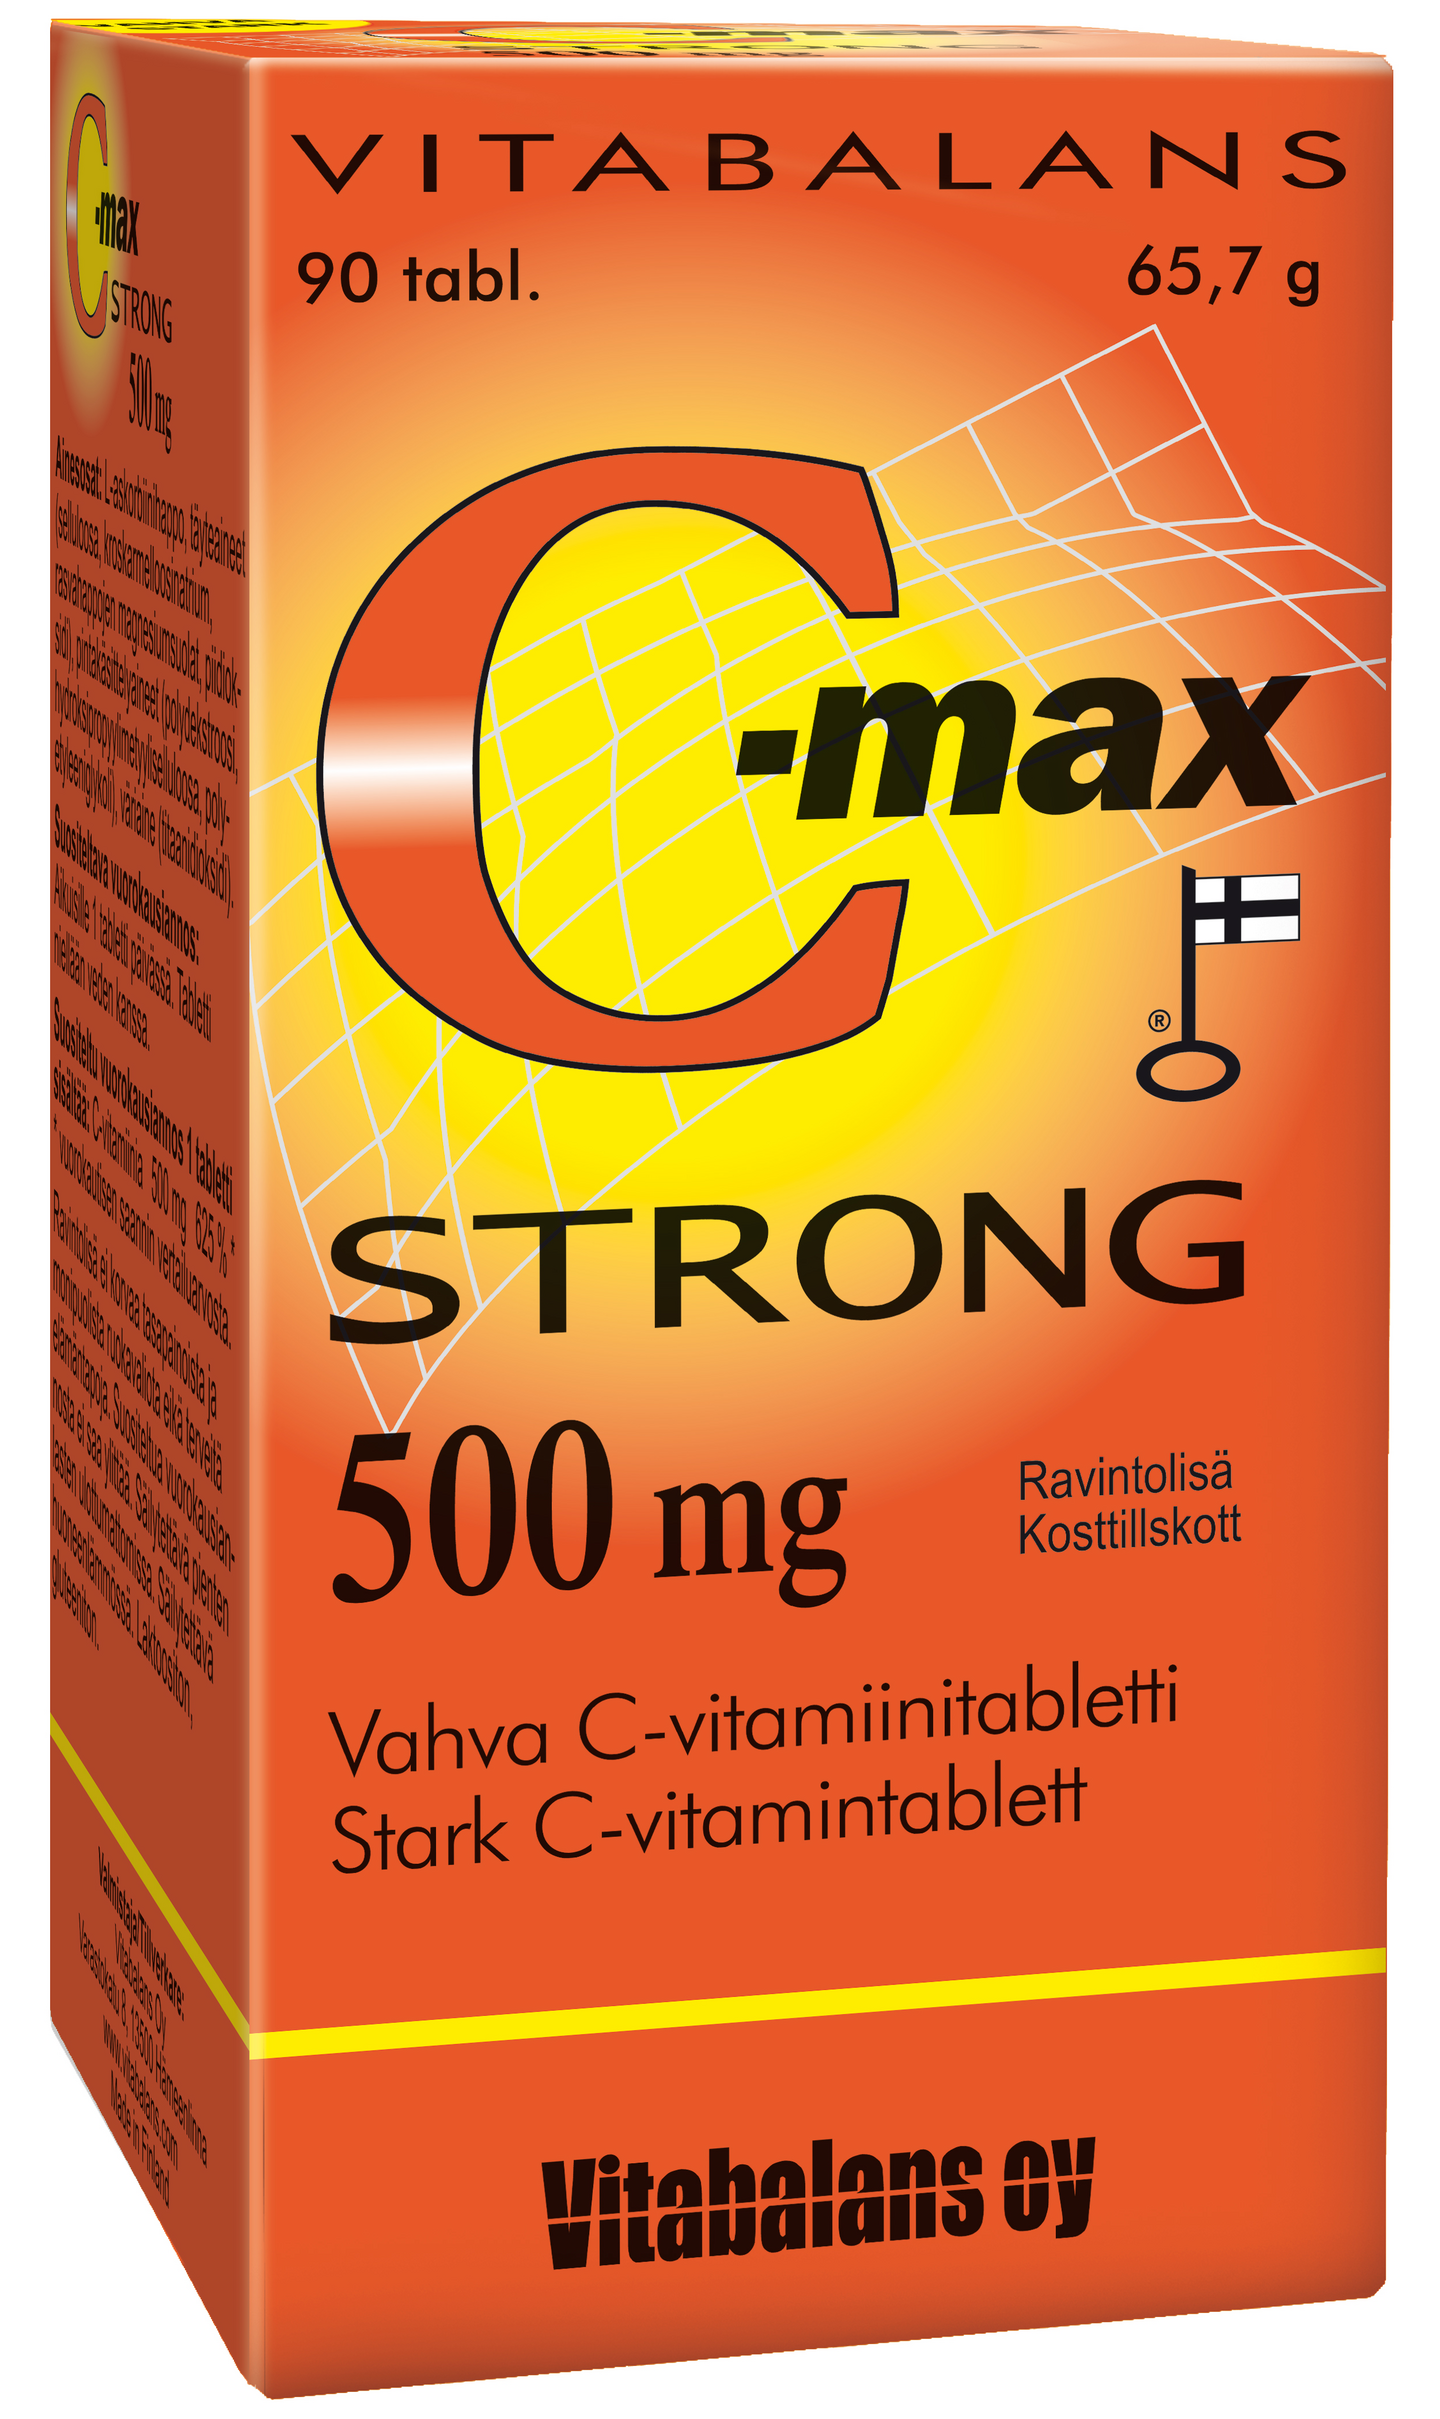 C-max Strong 500mg Vahva C-vitamiinitabletti 90 kpl